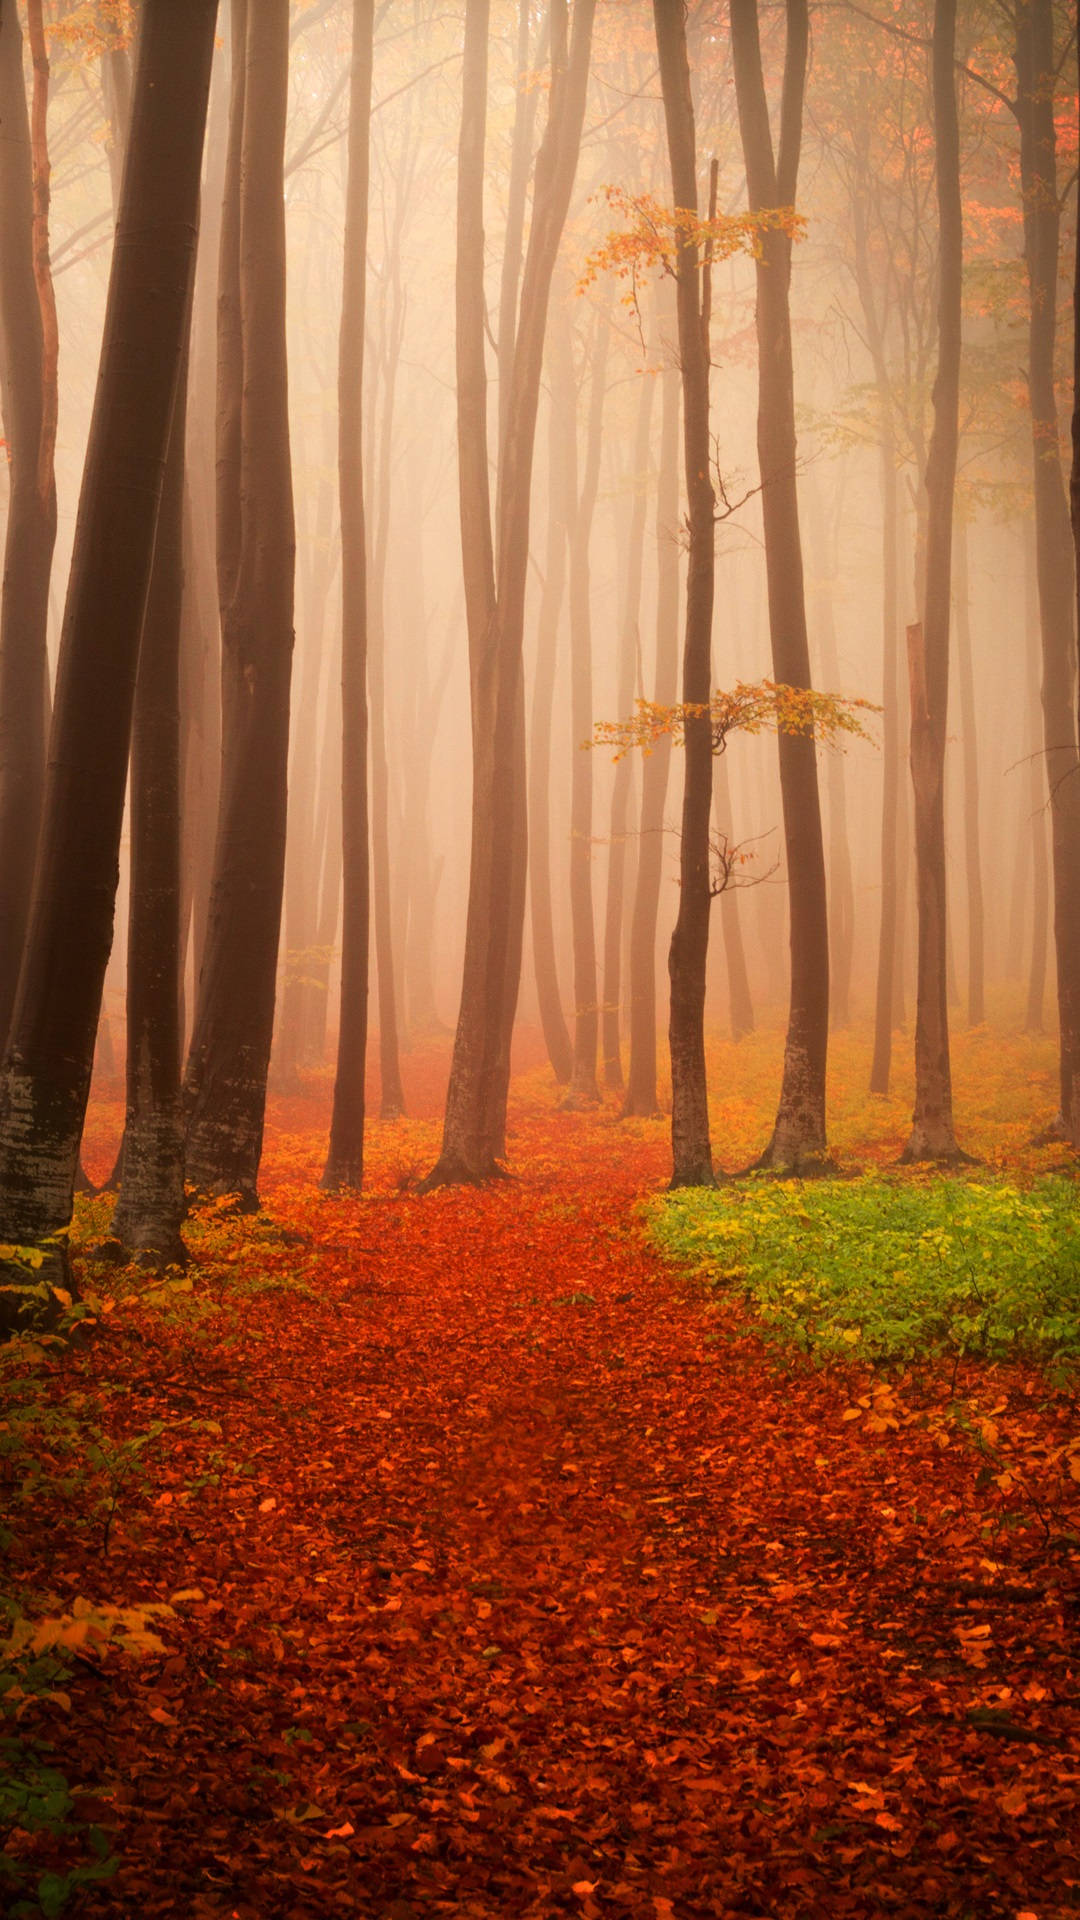 Dejlig Misty Efterårsskov Iphone Wallpaper